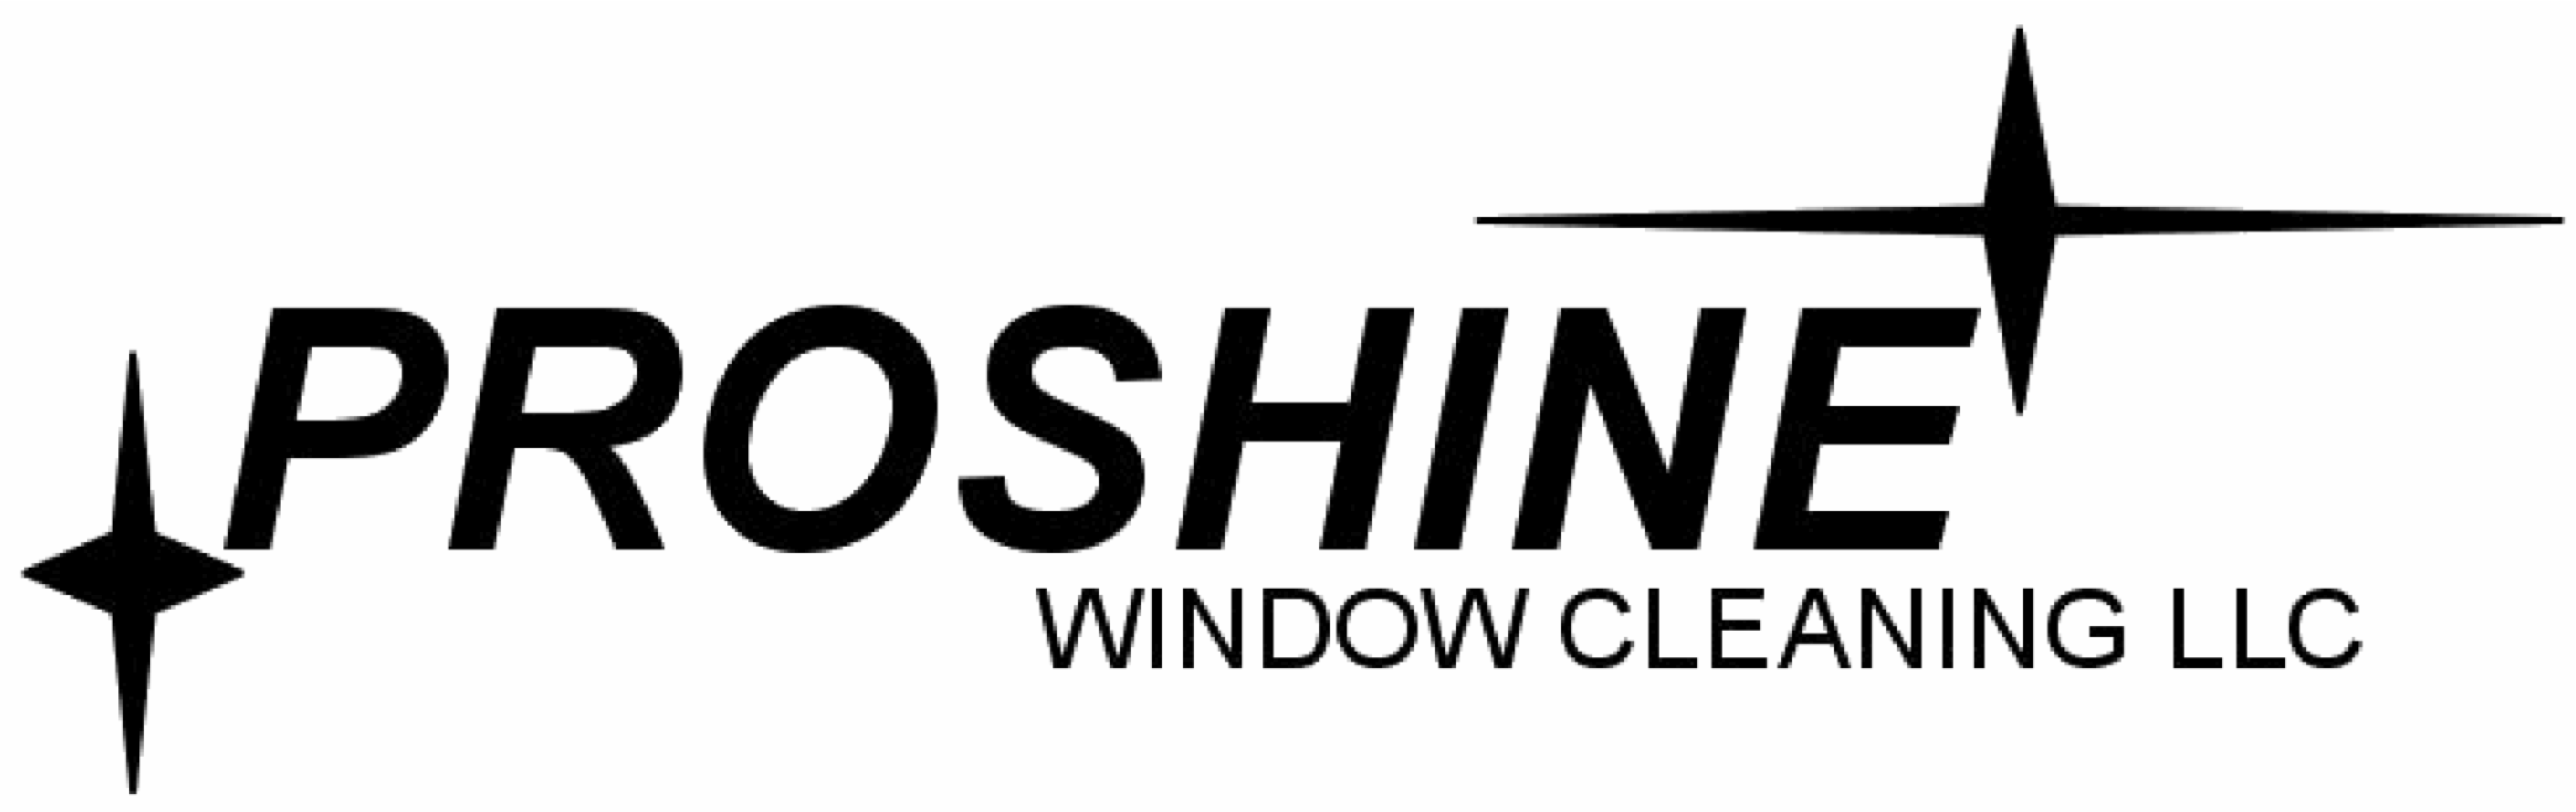 Proshine Window Cleaning, LLC Logo